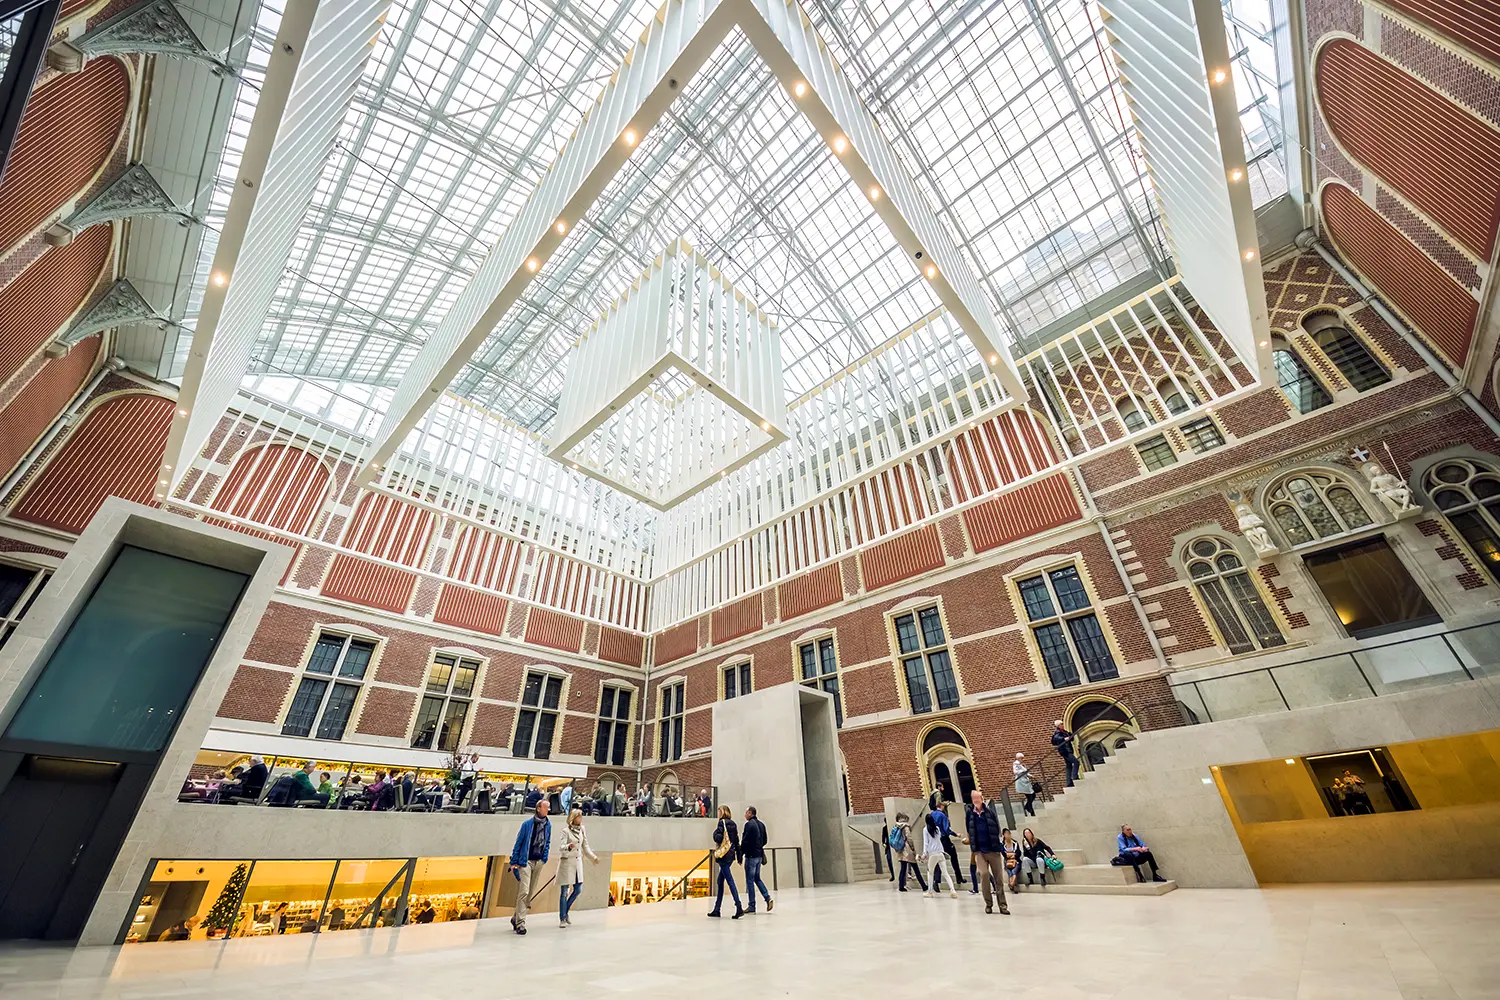 Courtyard in the Rijksmuseum in Amsterdam